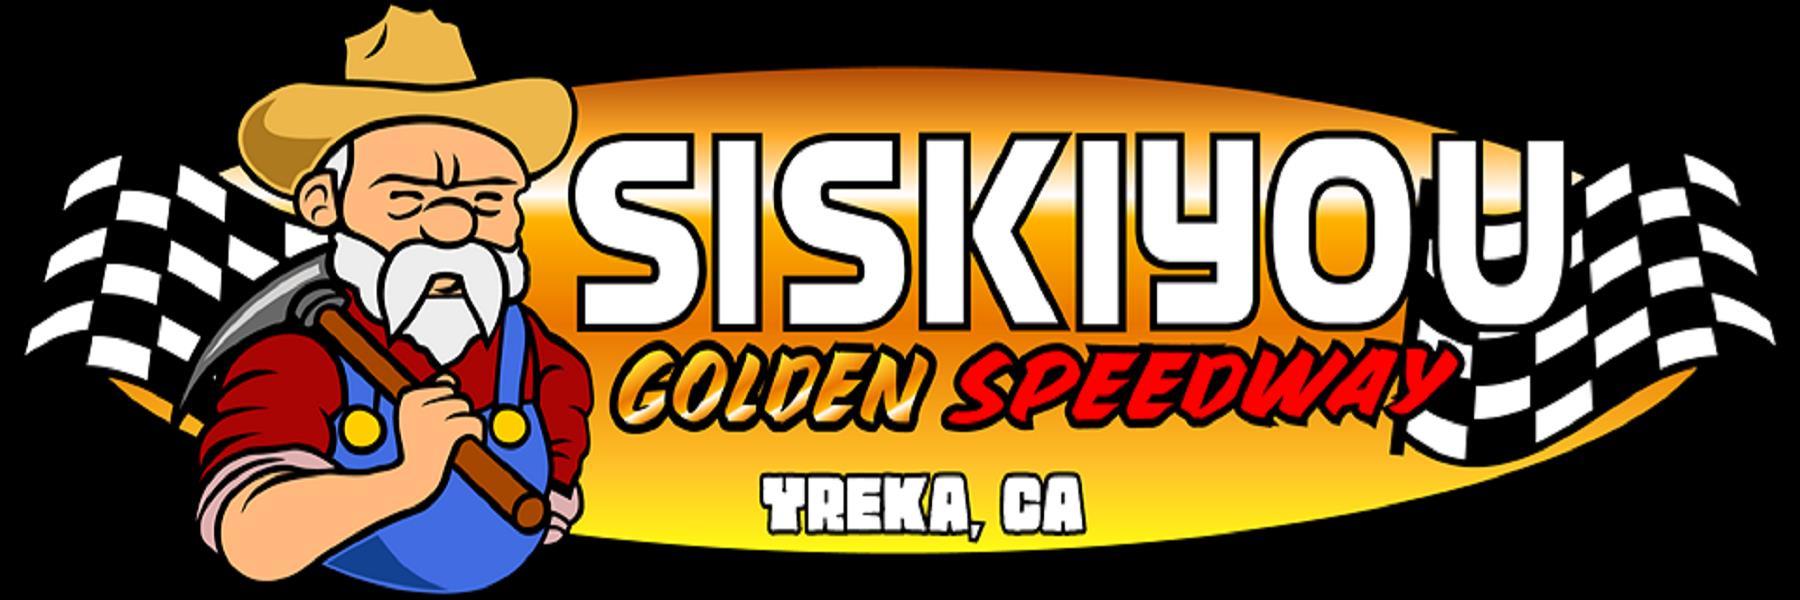 6/3/2022 - Siskiyou Golden Speedway